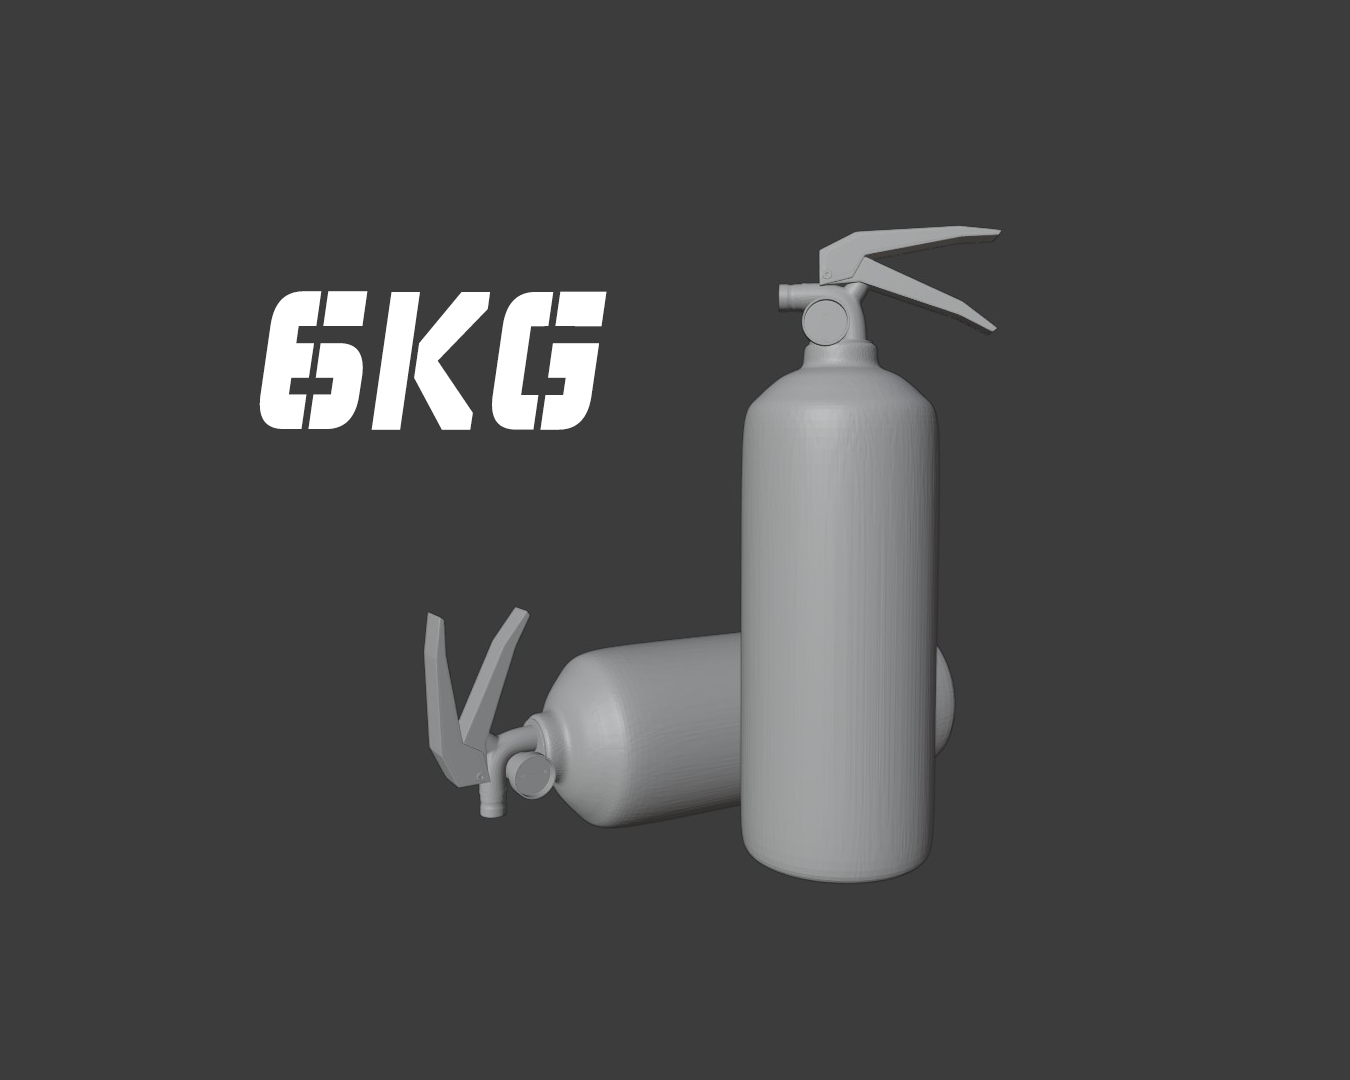 Fire extinguisher 6kg (4pc)